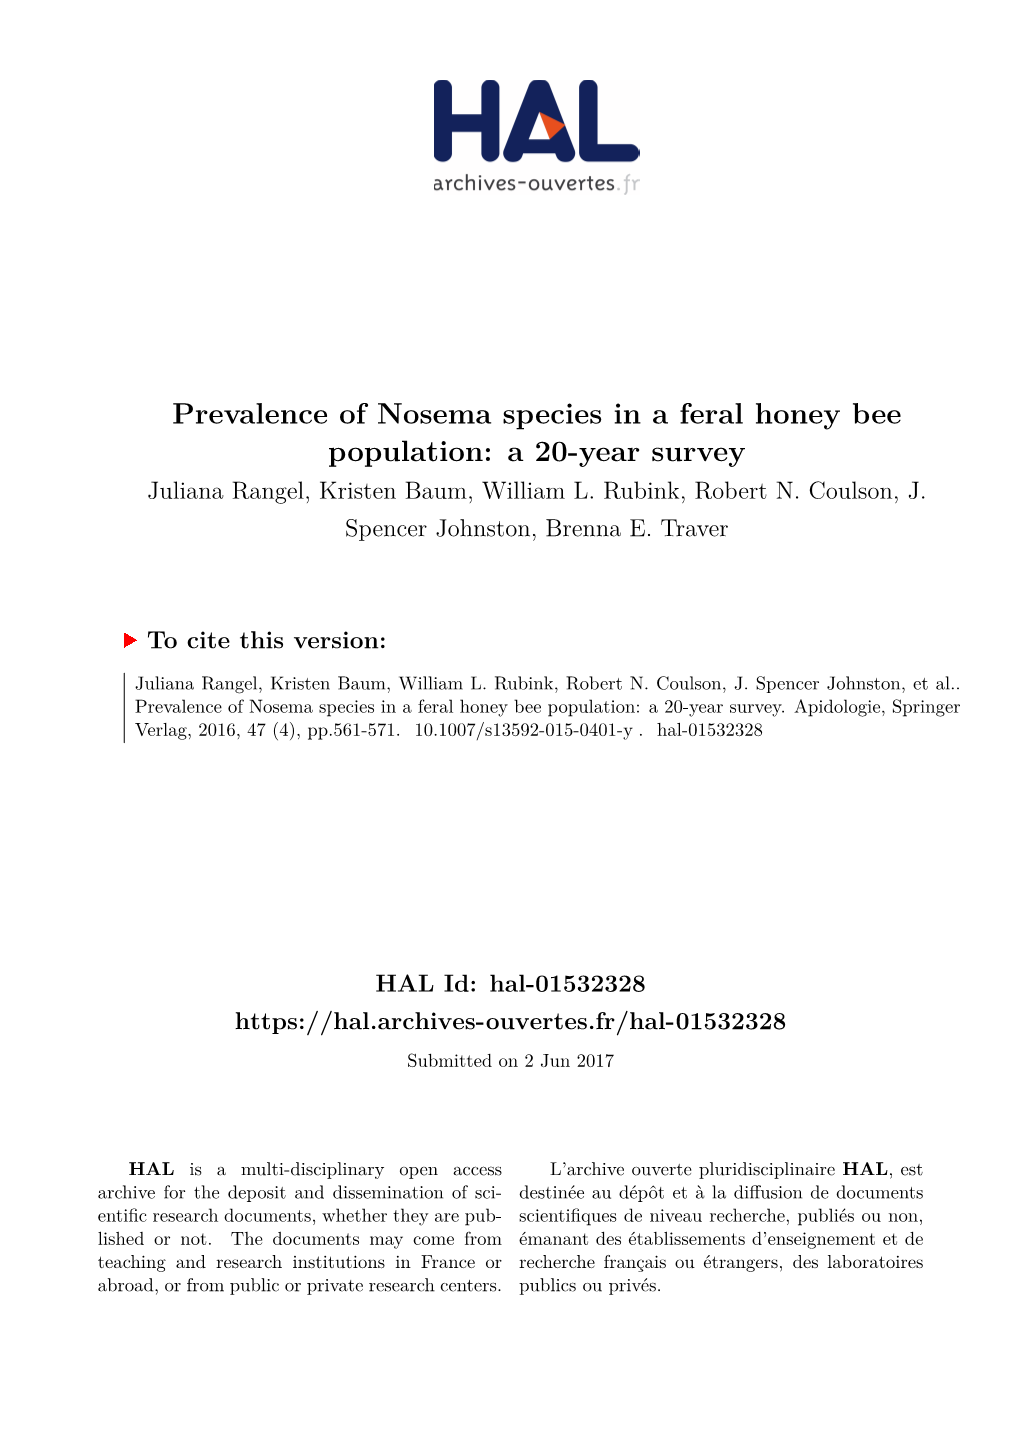 Prevalence of Nosema Species in a Feral Honey Bee Population: a 20-Year Survey Juliana Rangel, Kristen Baum, William L